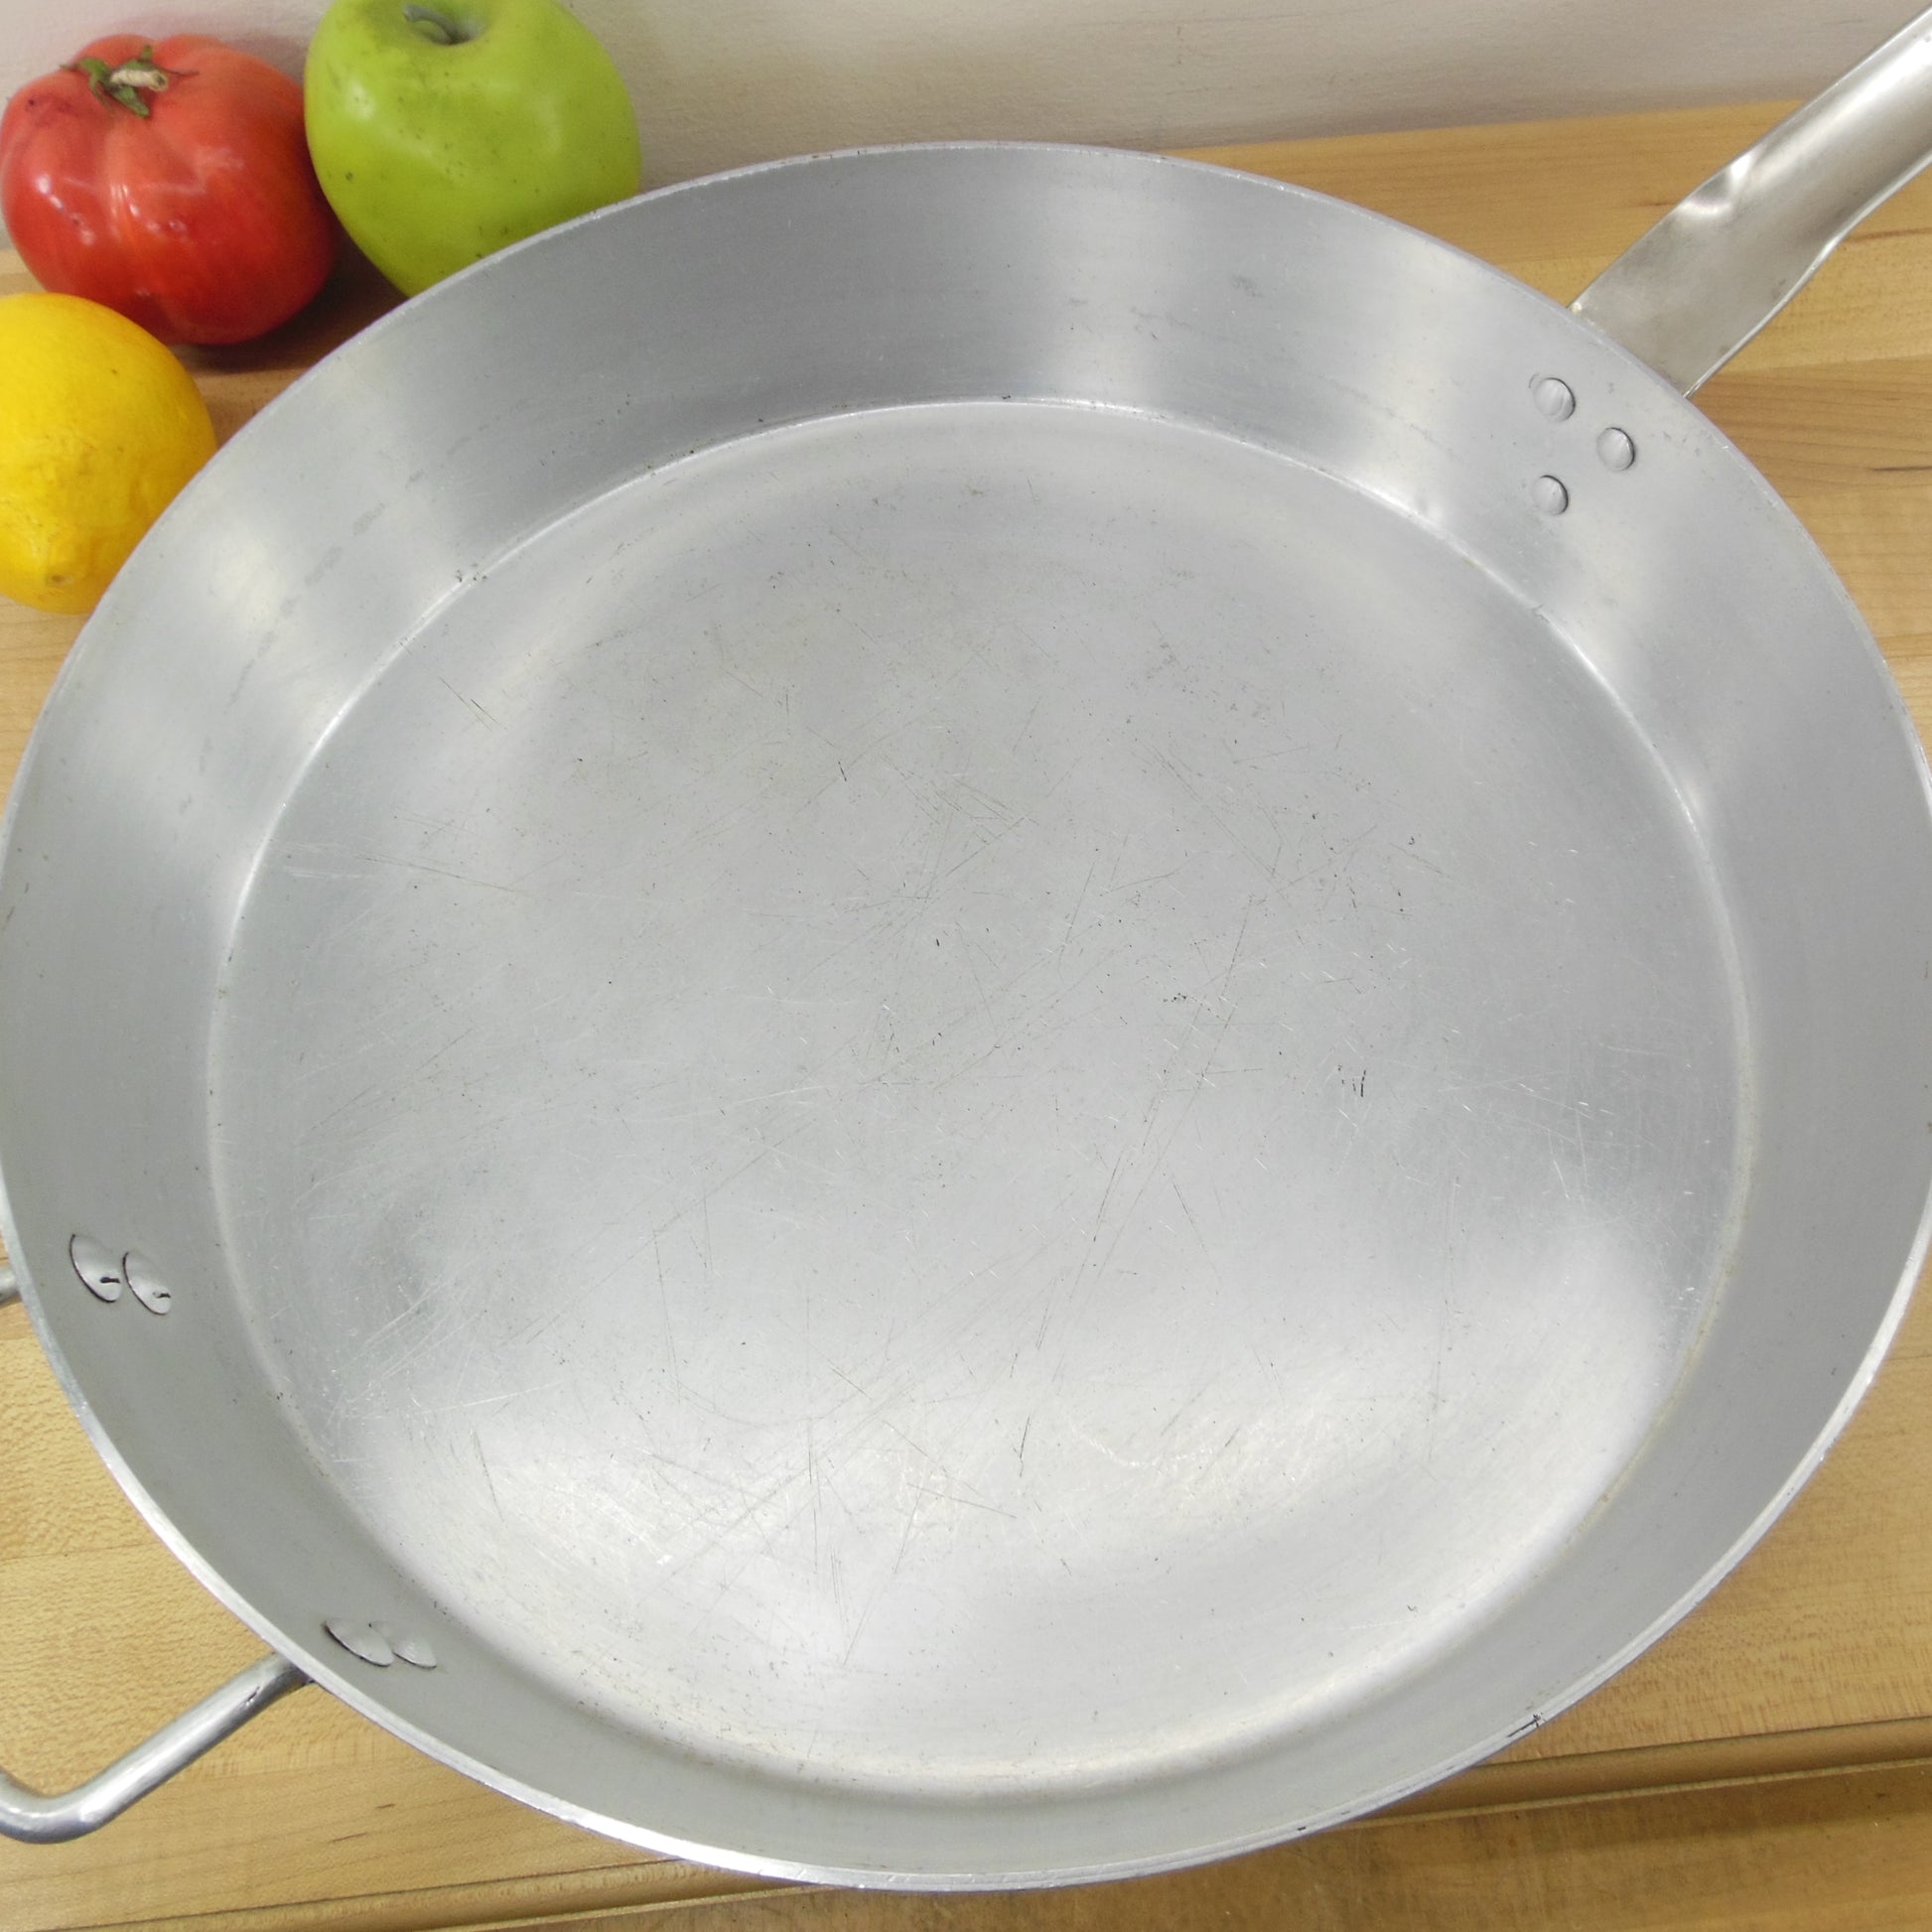 Enterprise Quality Cookware Large 14” Aluminum Frying Pan Skillet